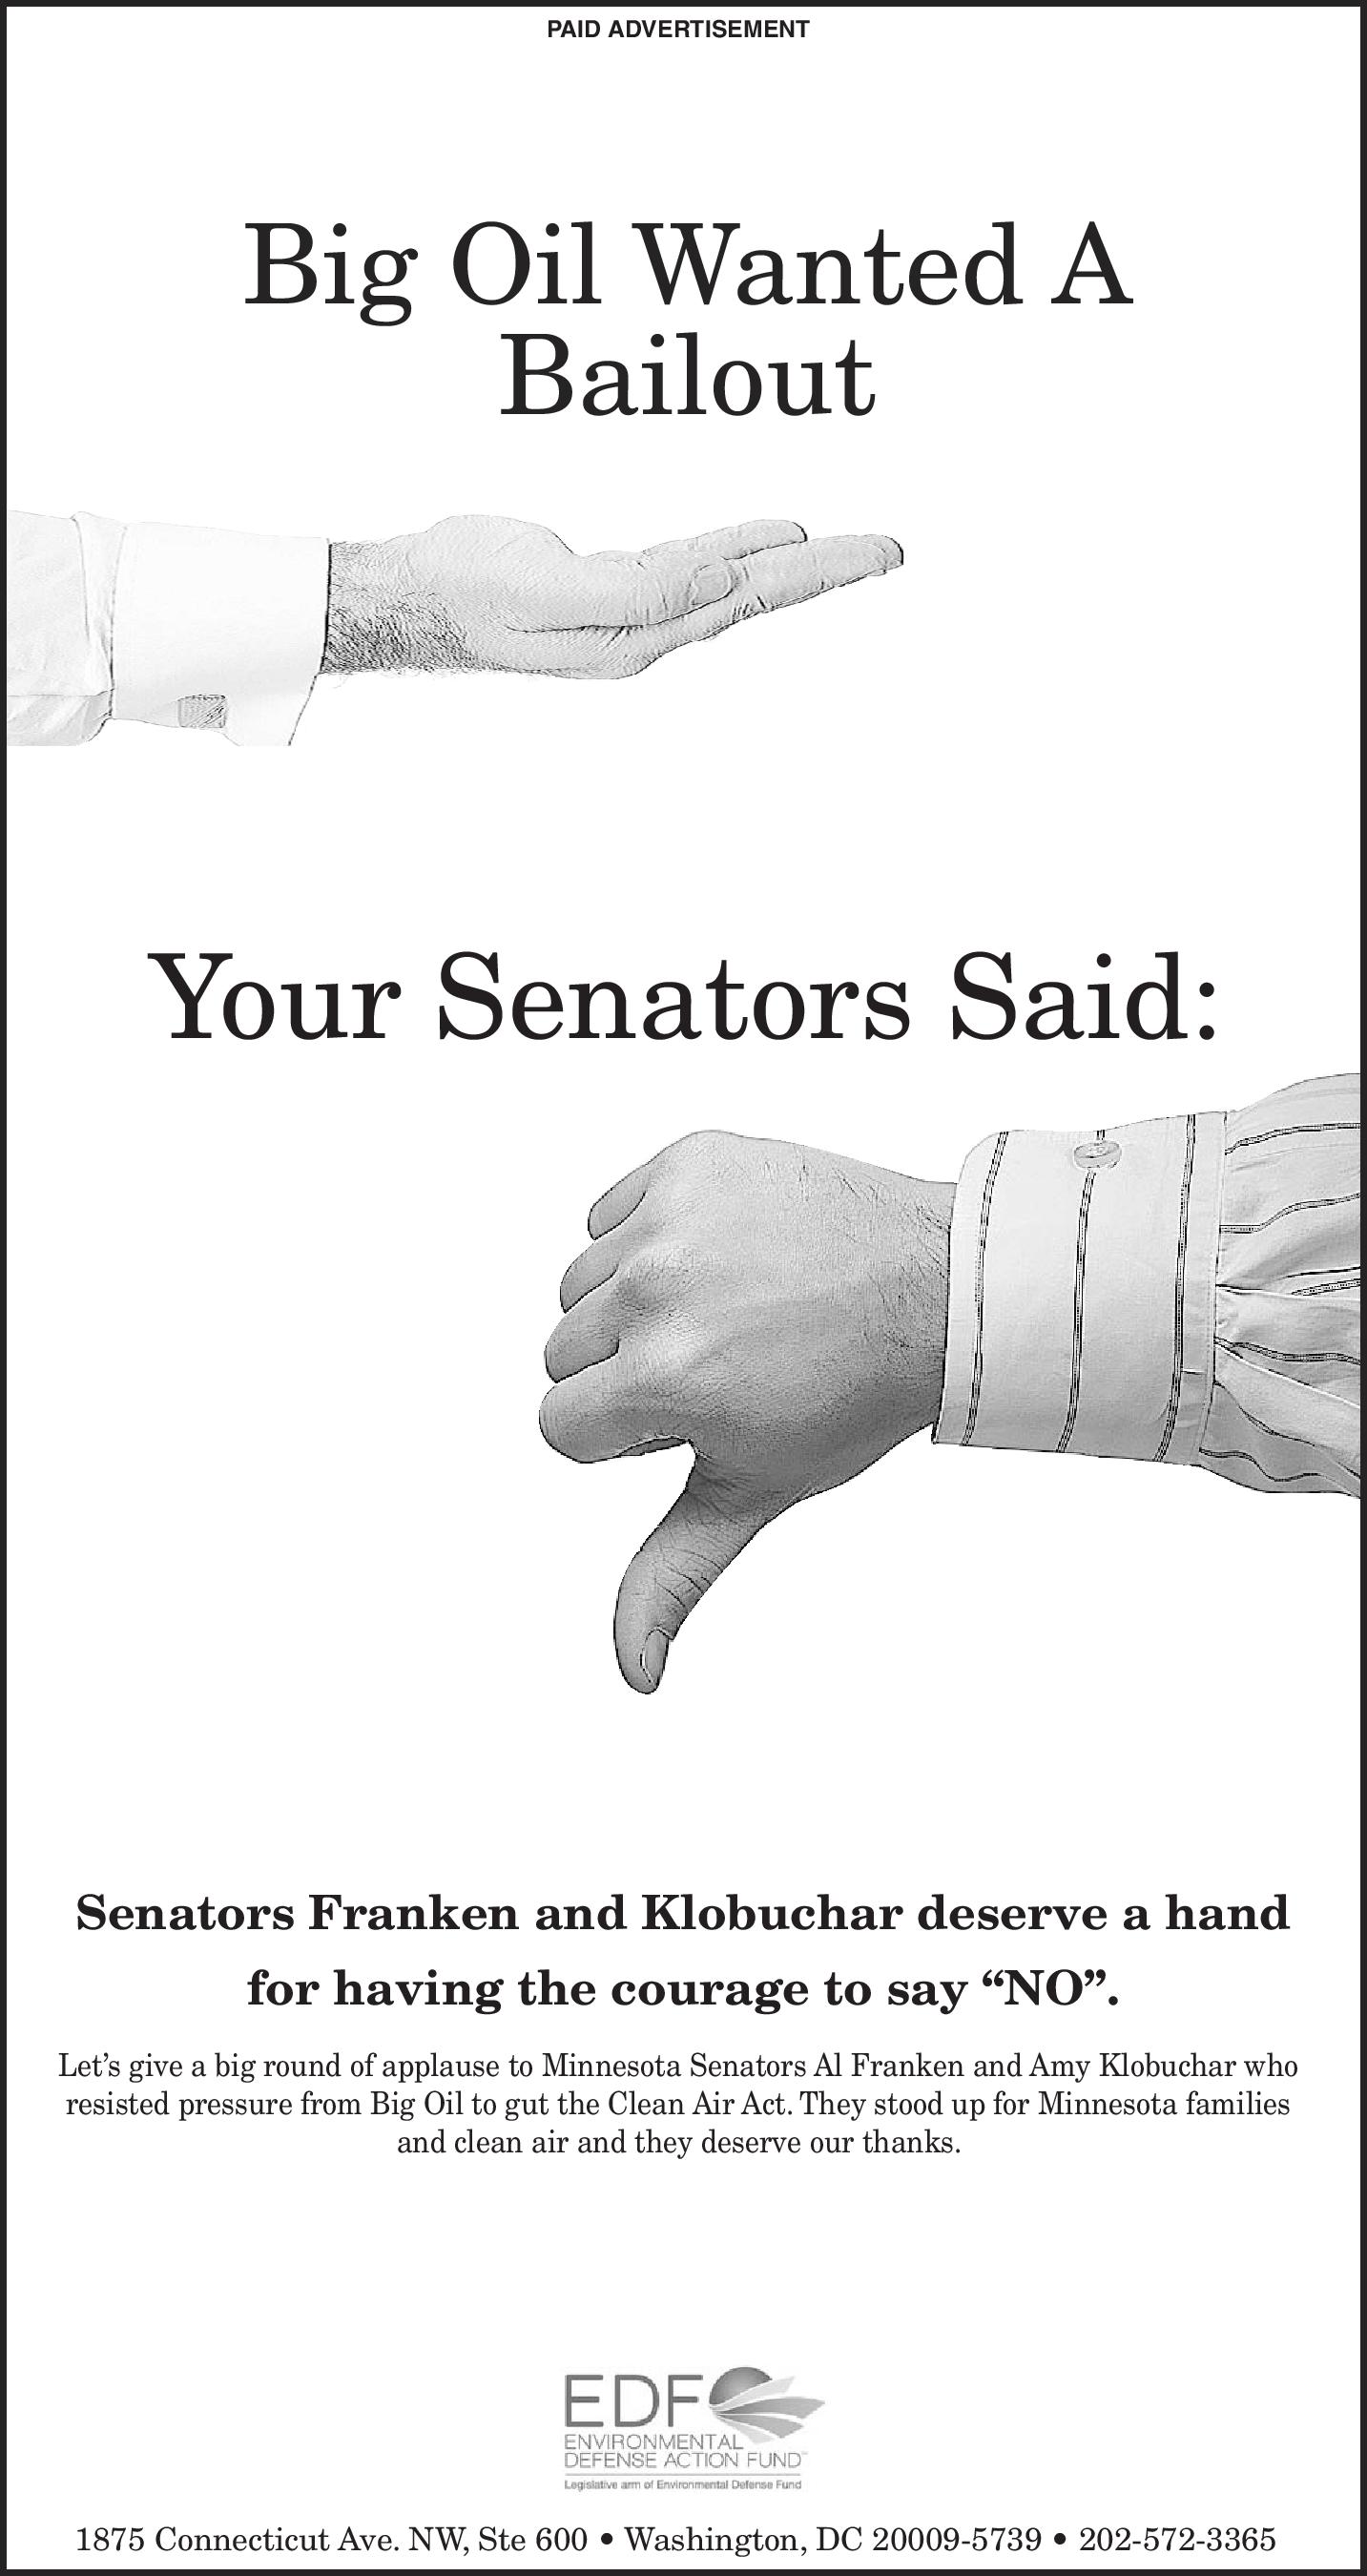 Thank You for Saying "No" to Big Oil: Senators Franken and Klobuchar